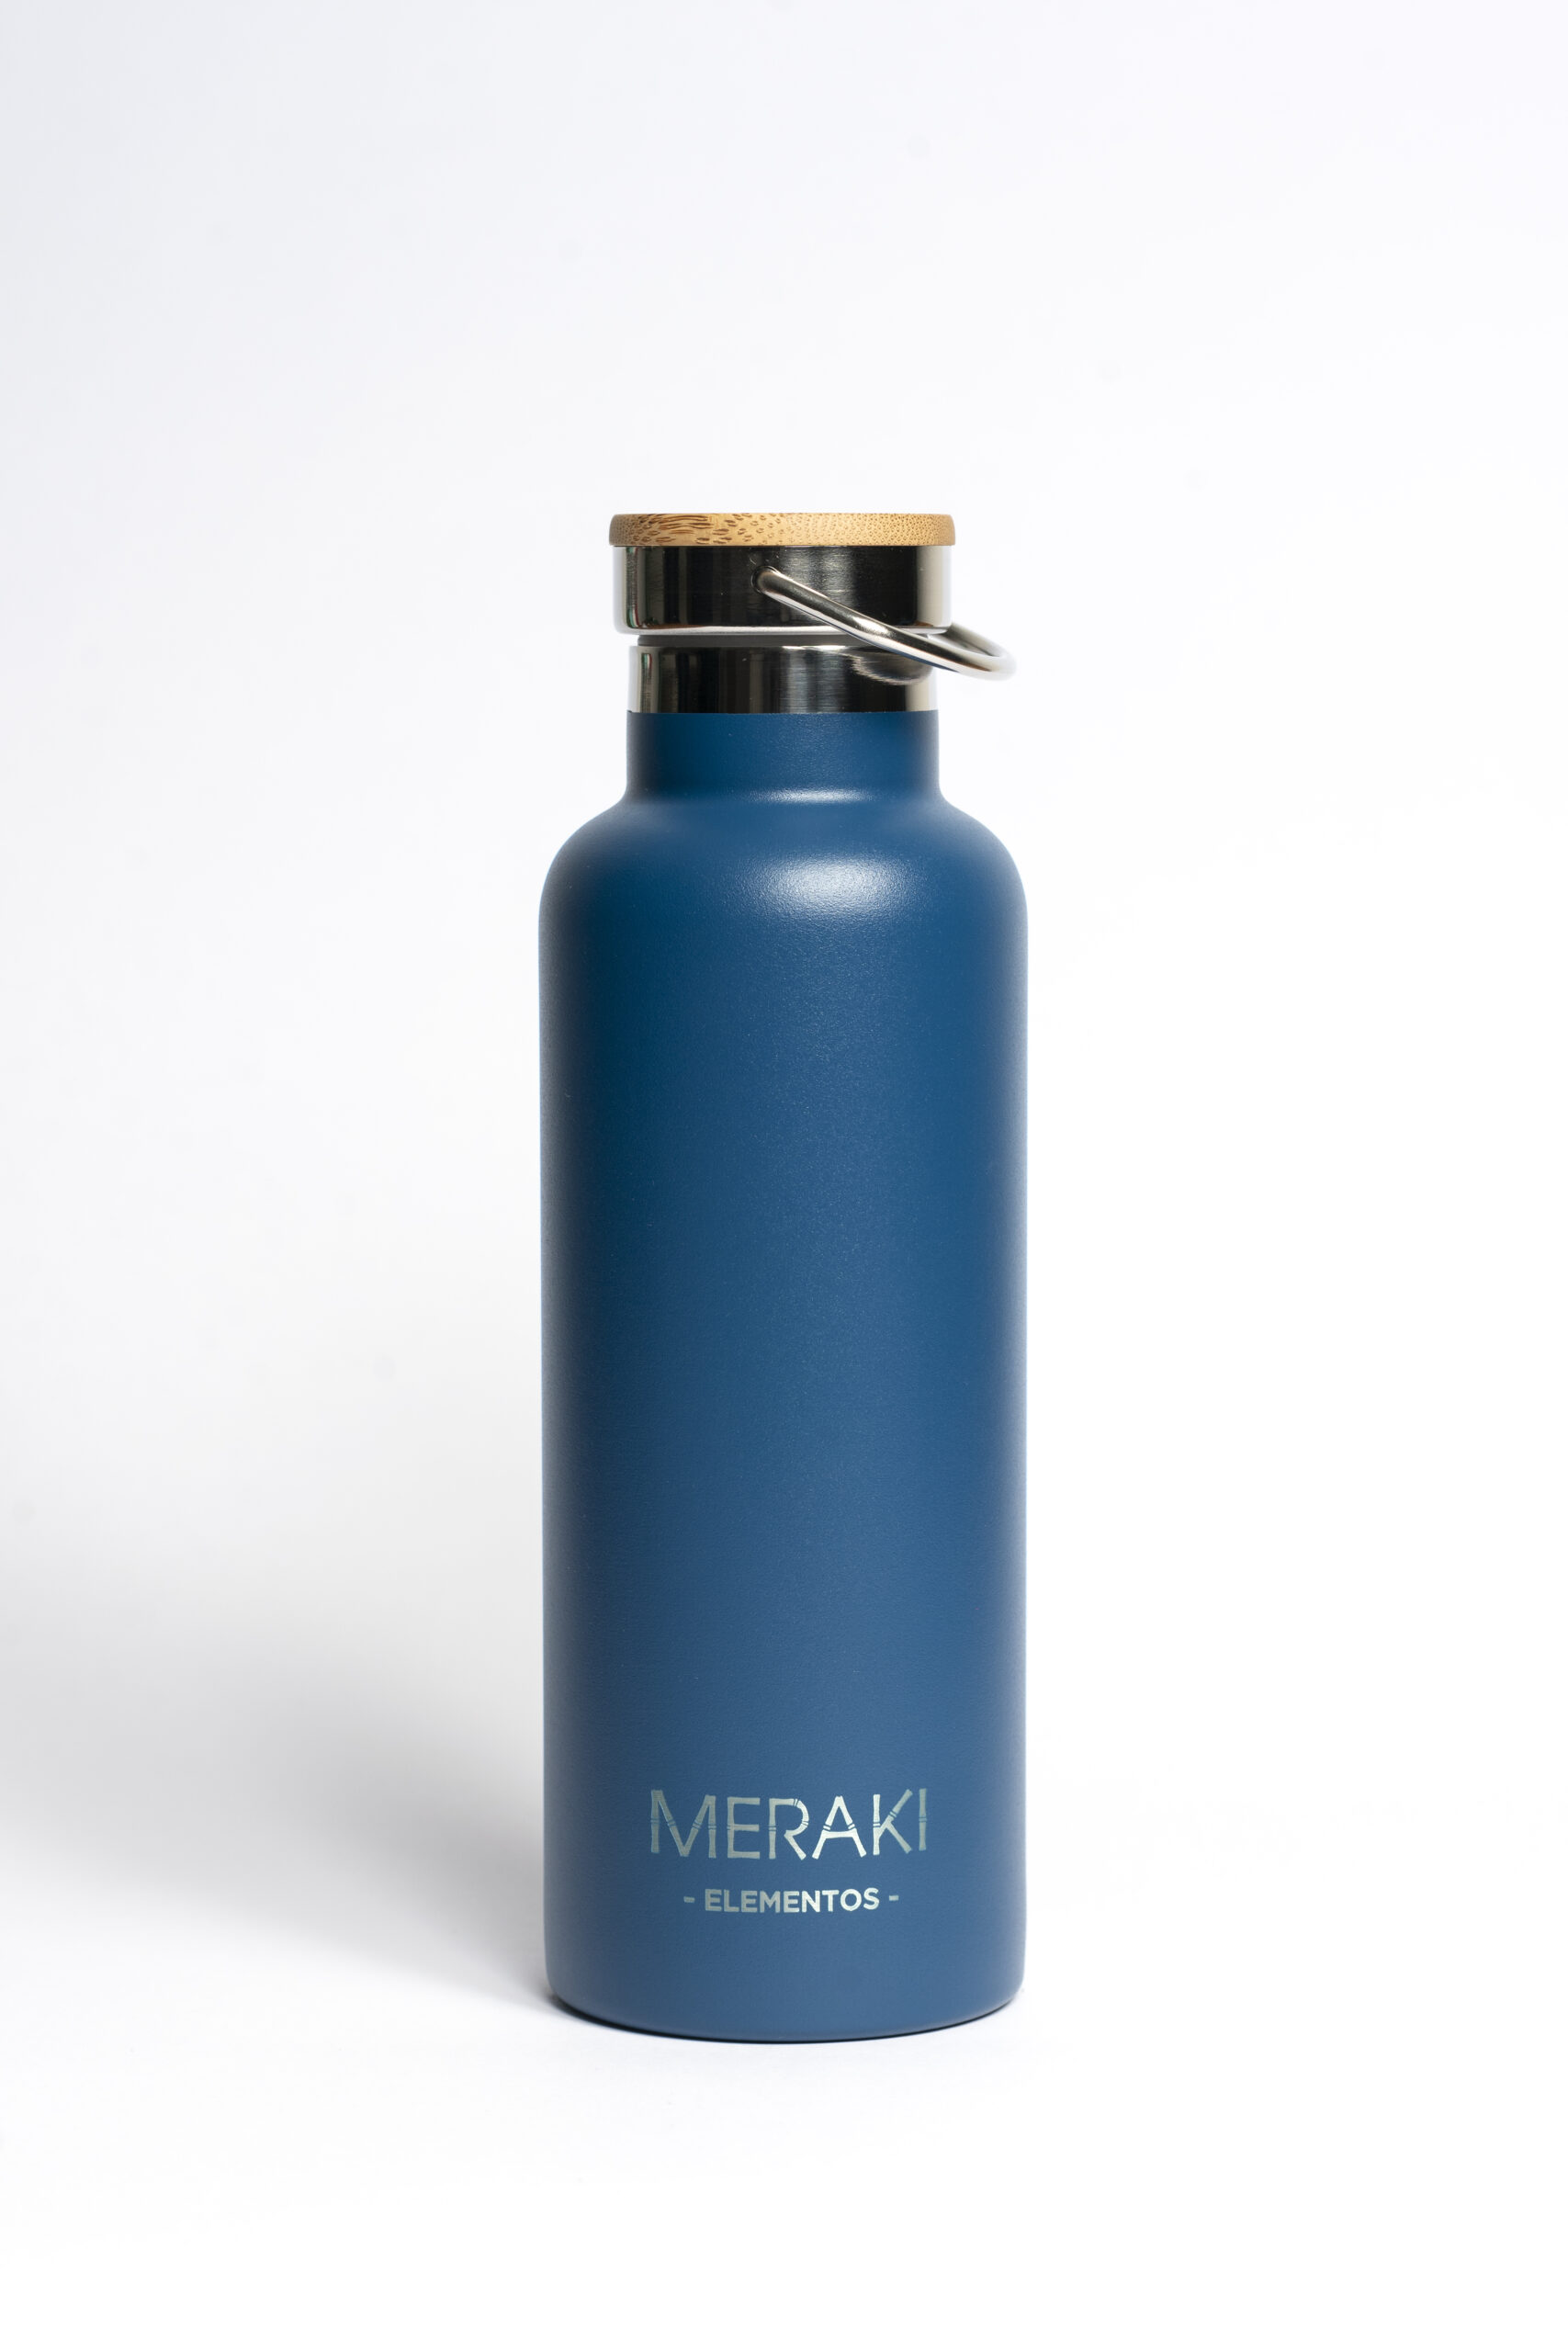 https://merakisustentable.com/ar/wp-content/uploads/2020/08/Meraki-botellas_06-scaled.jpg